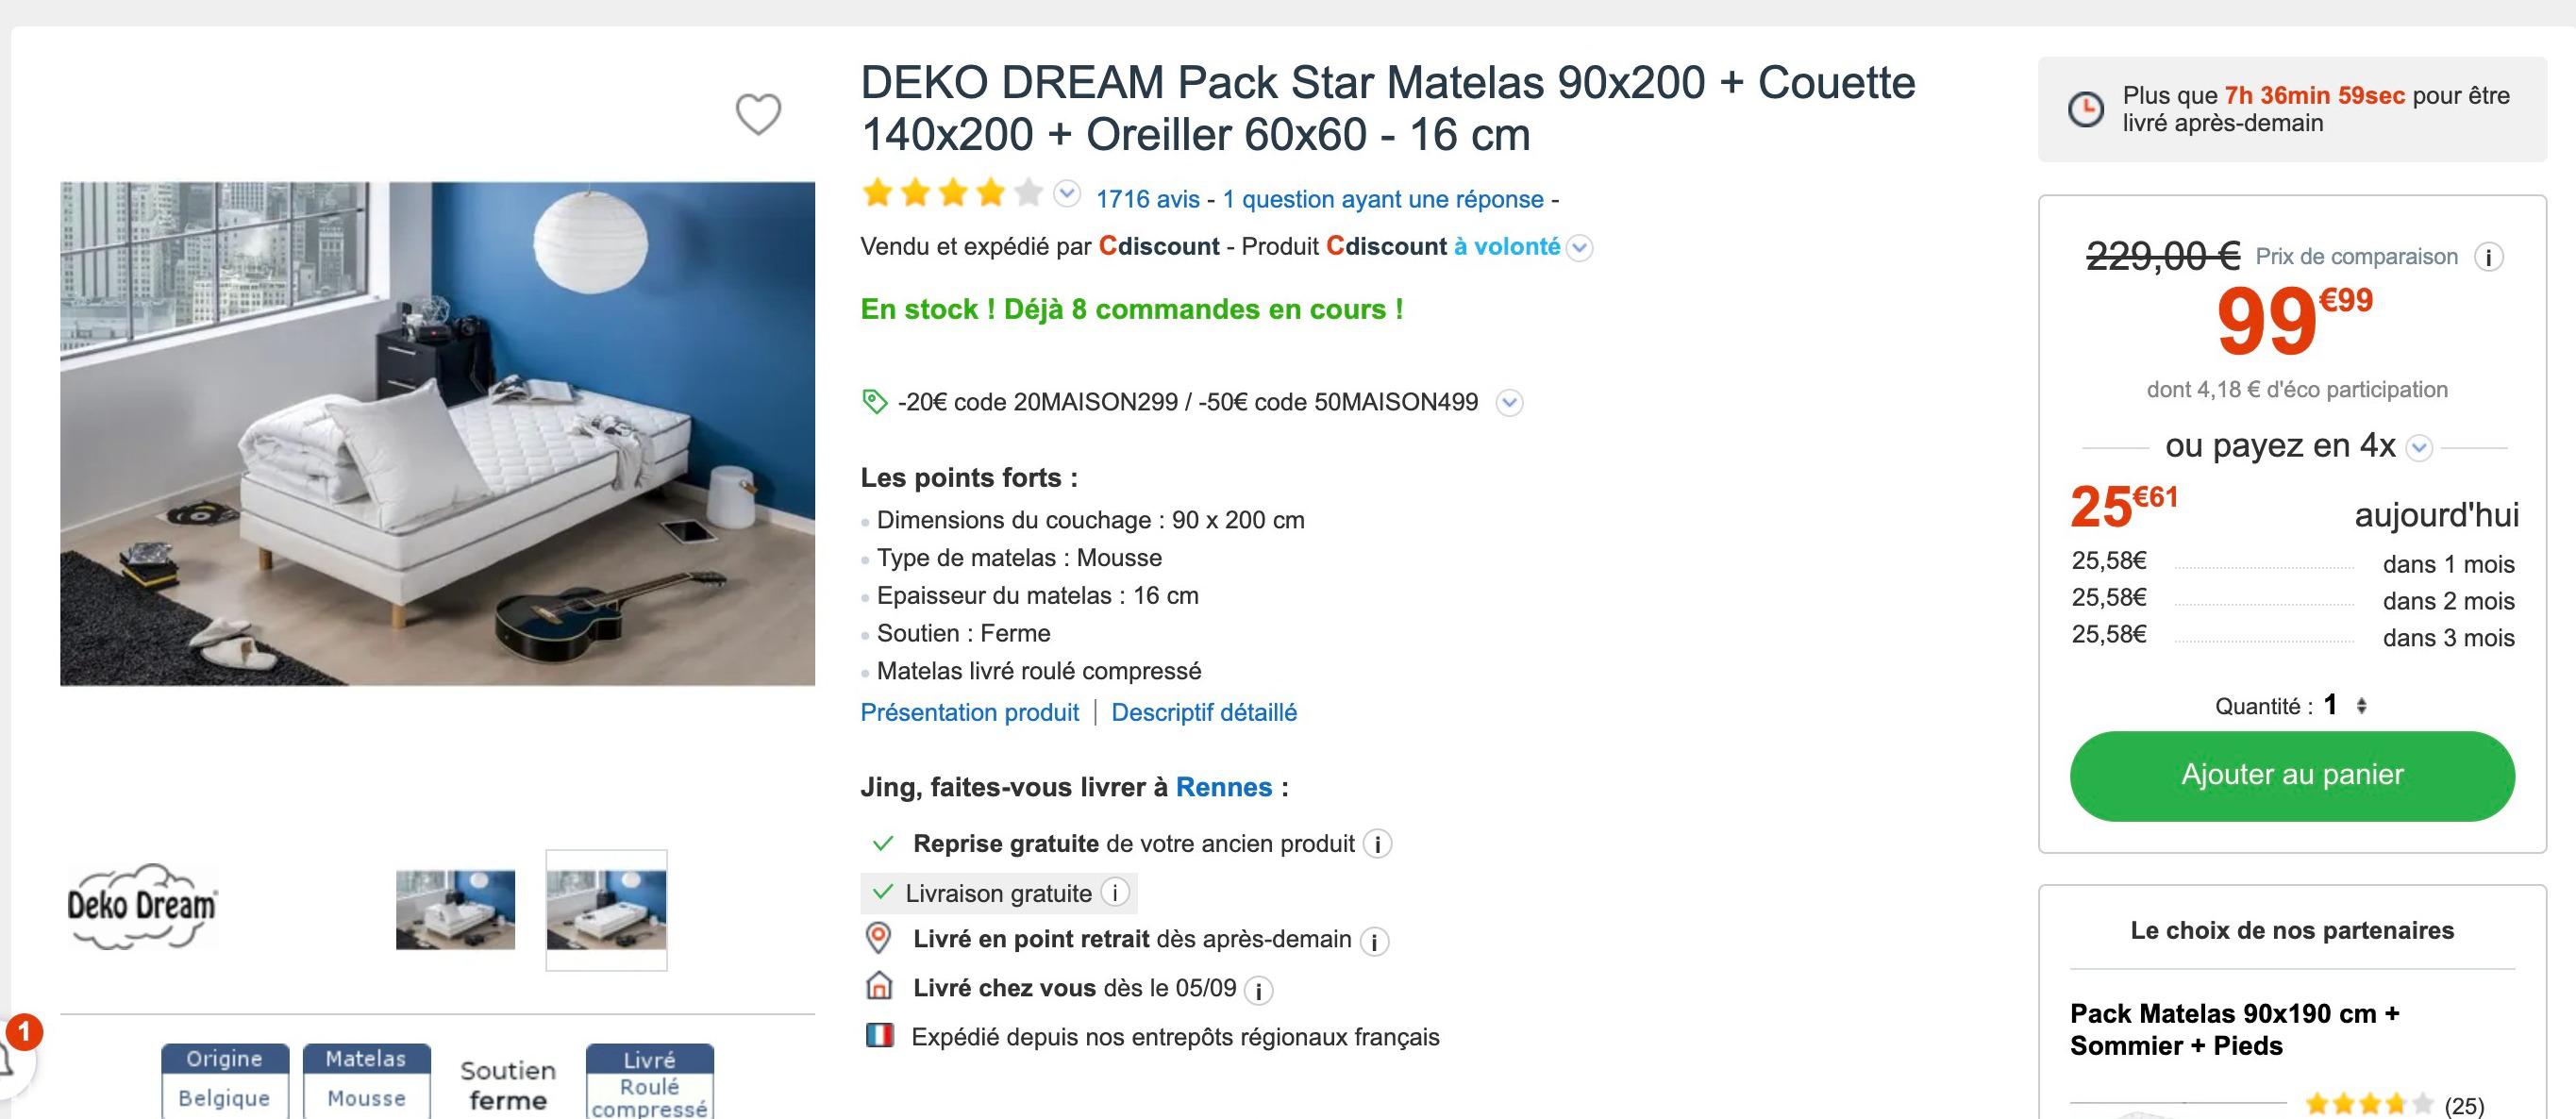 Deko dream pack star matelas 90x200 + couette 140x200 + oreiller 60x60 - 16  cm DEKO DREAM